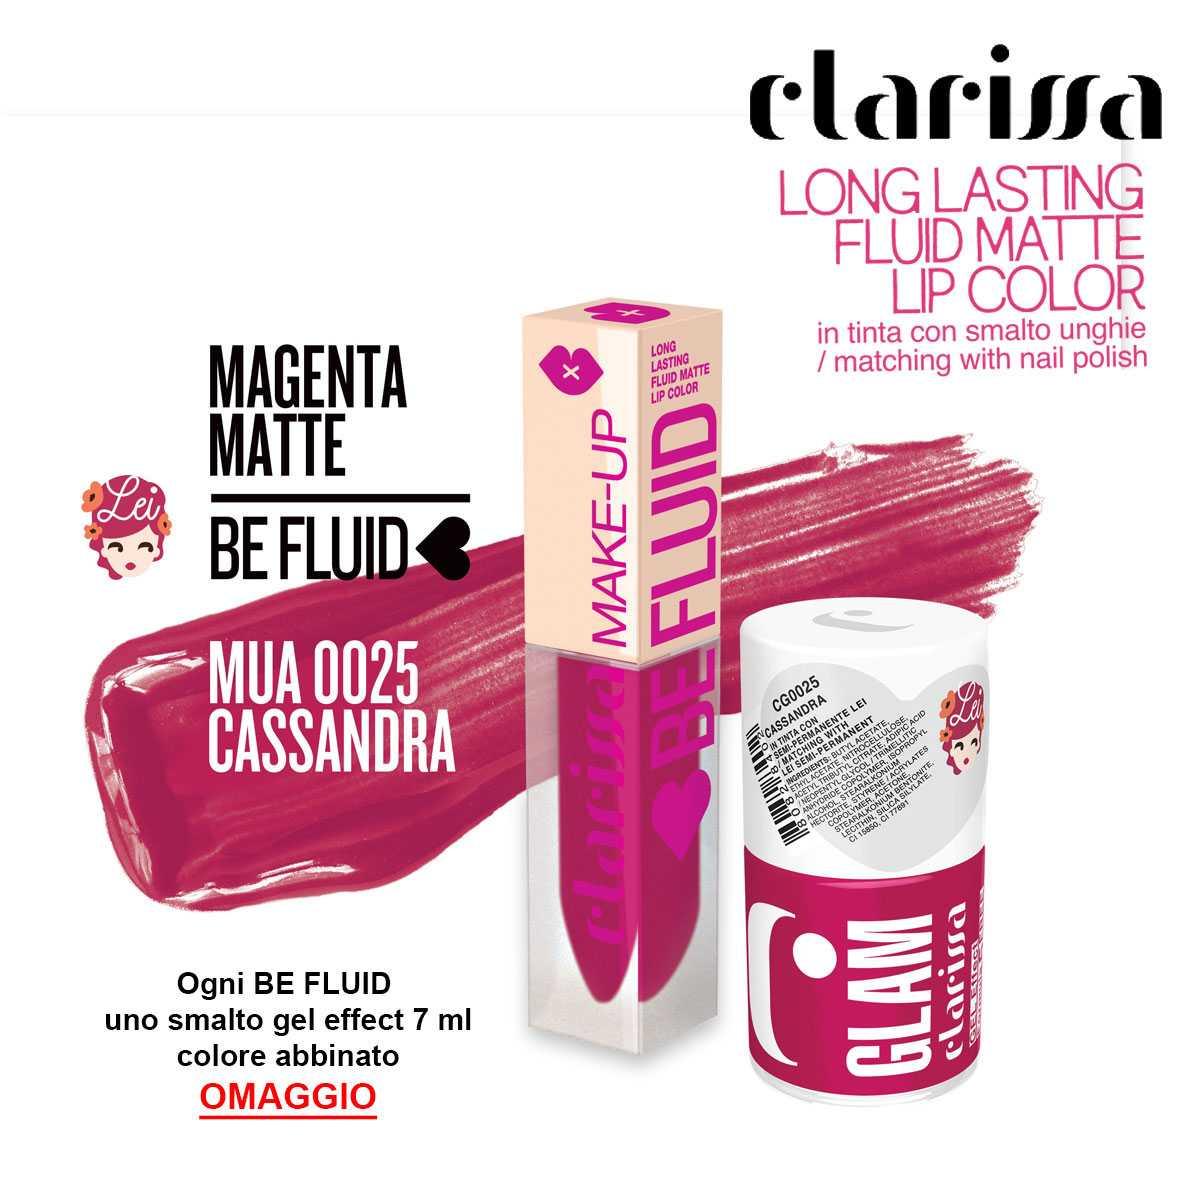 Be fluid lip color magenta matte cassandra  + c-glam magenta matte cassandra omaggio + tester